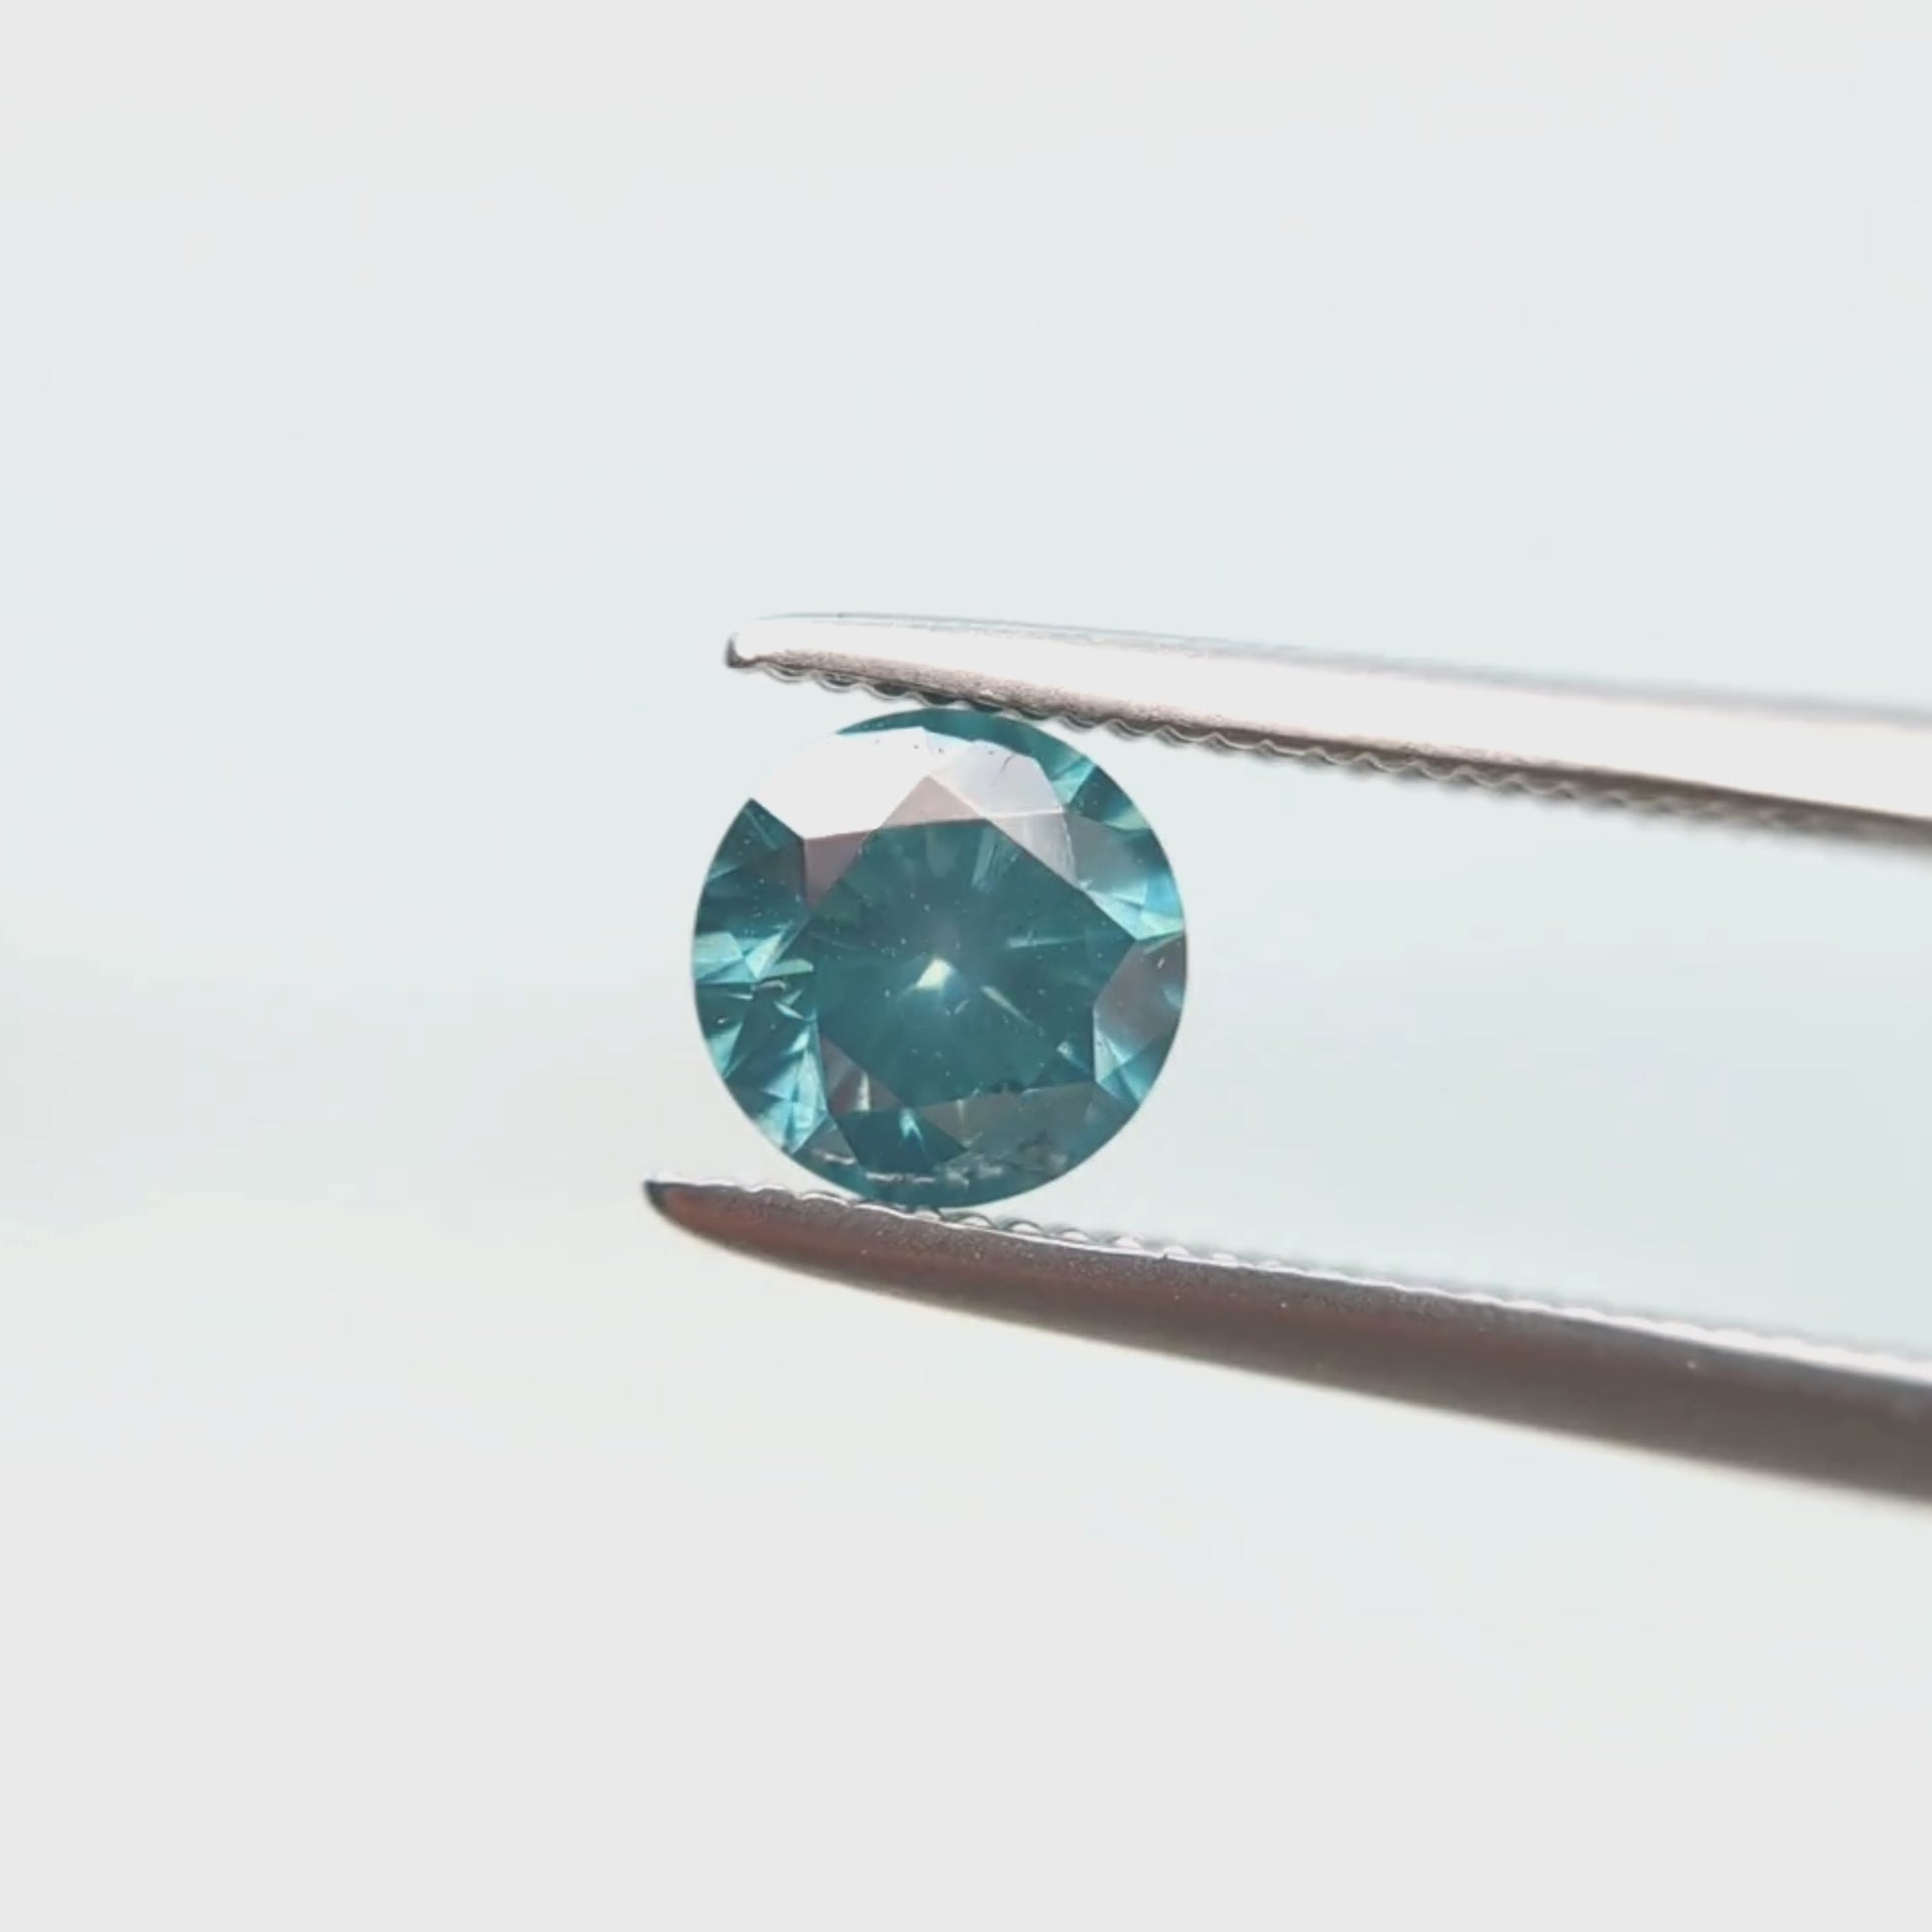 0.53 Carat Teal Round Diamond for Custom Work - Inventory Code SCR053